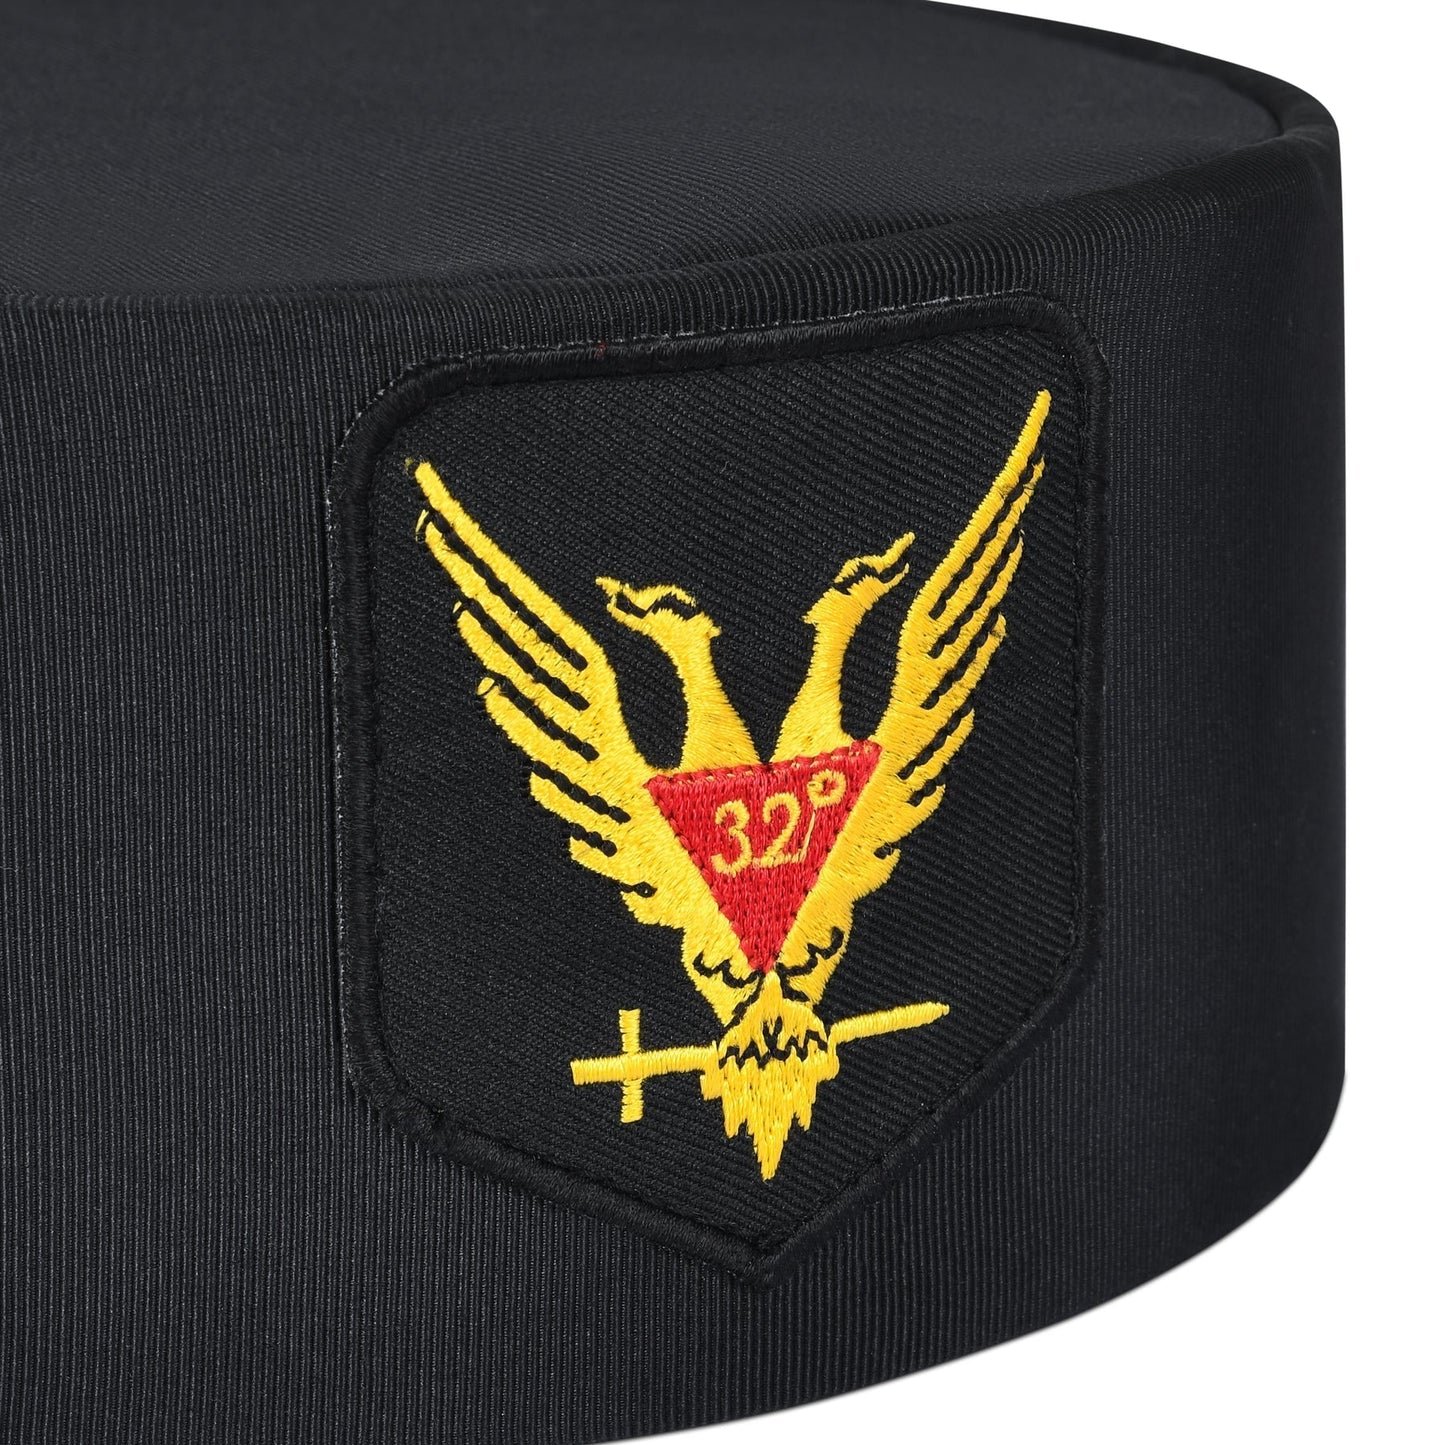 32nd Degree Scottish Rite Masonic Crown Cap - Wings Up Red & Gold-Crown Caps-Masonic Makers